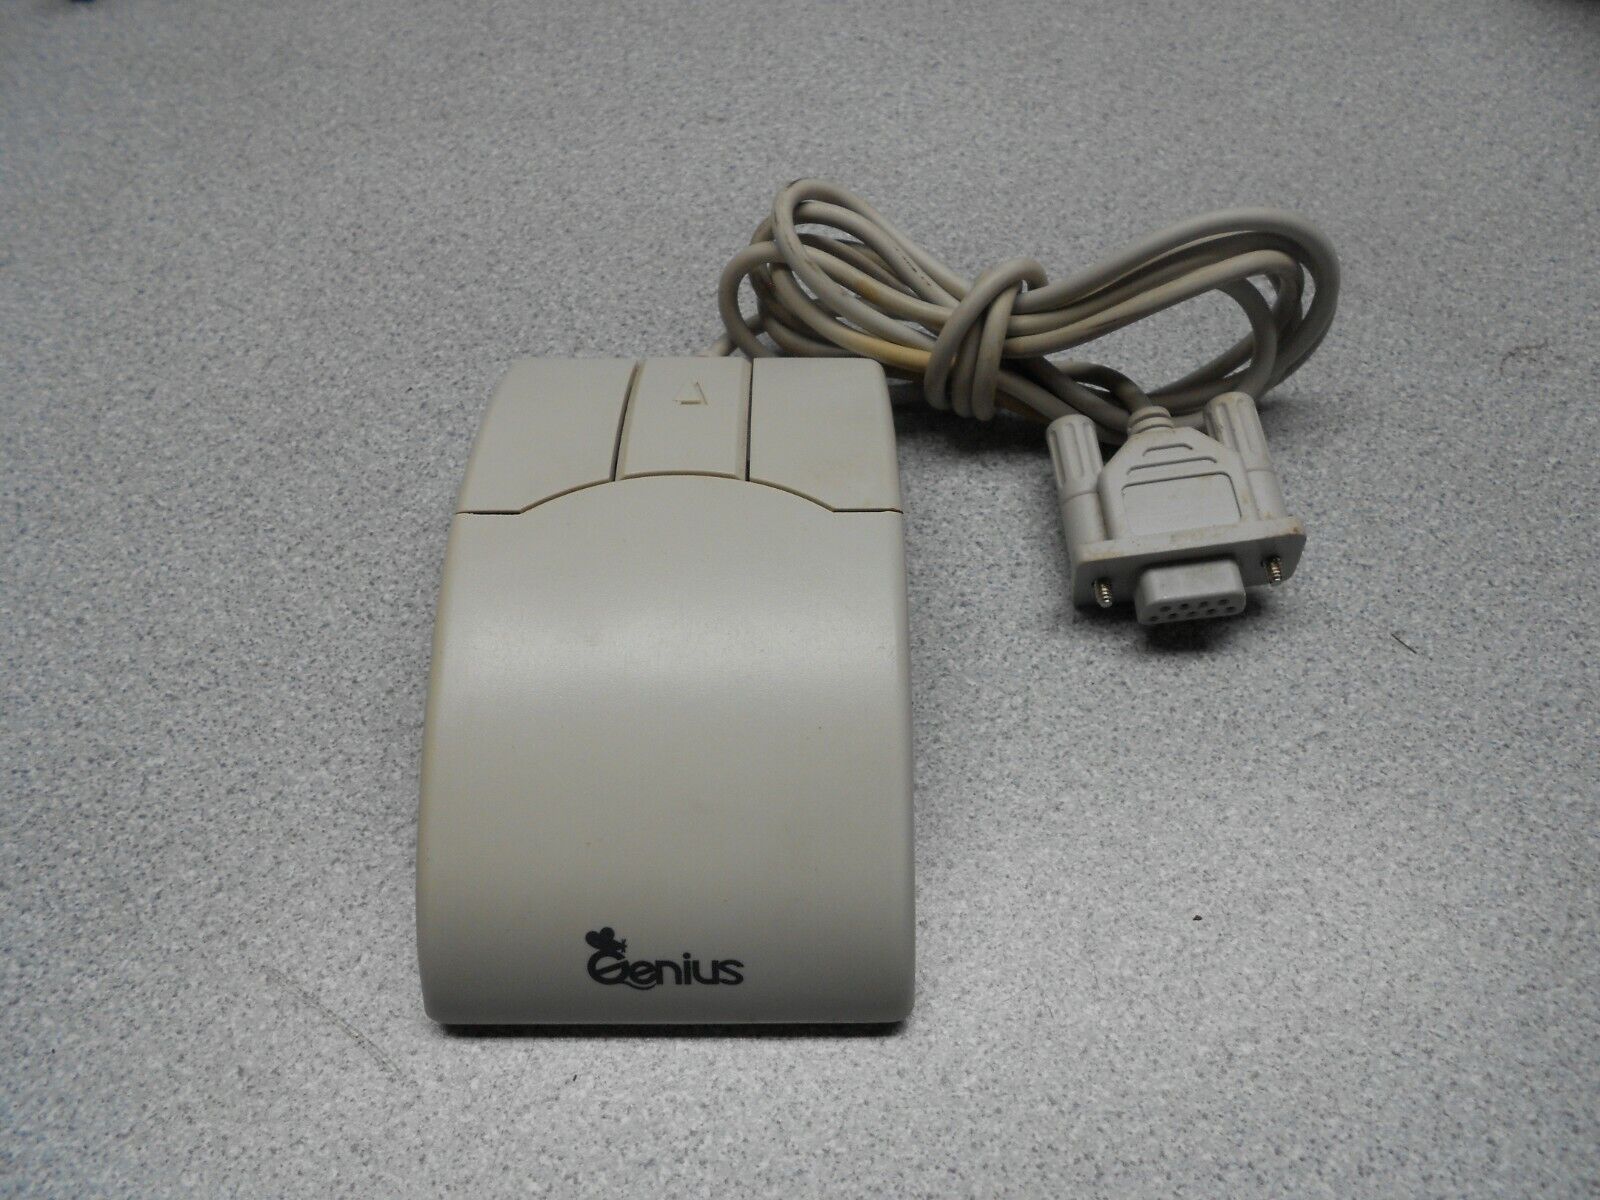 Genius serial mouse, model GM-6000, vintage from 80-90ies